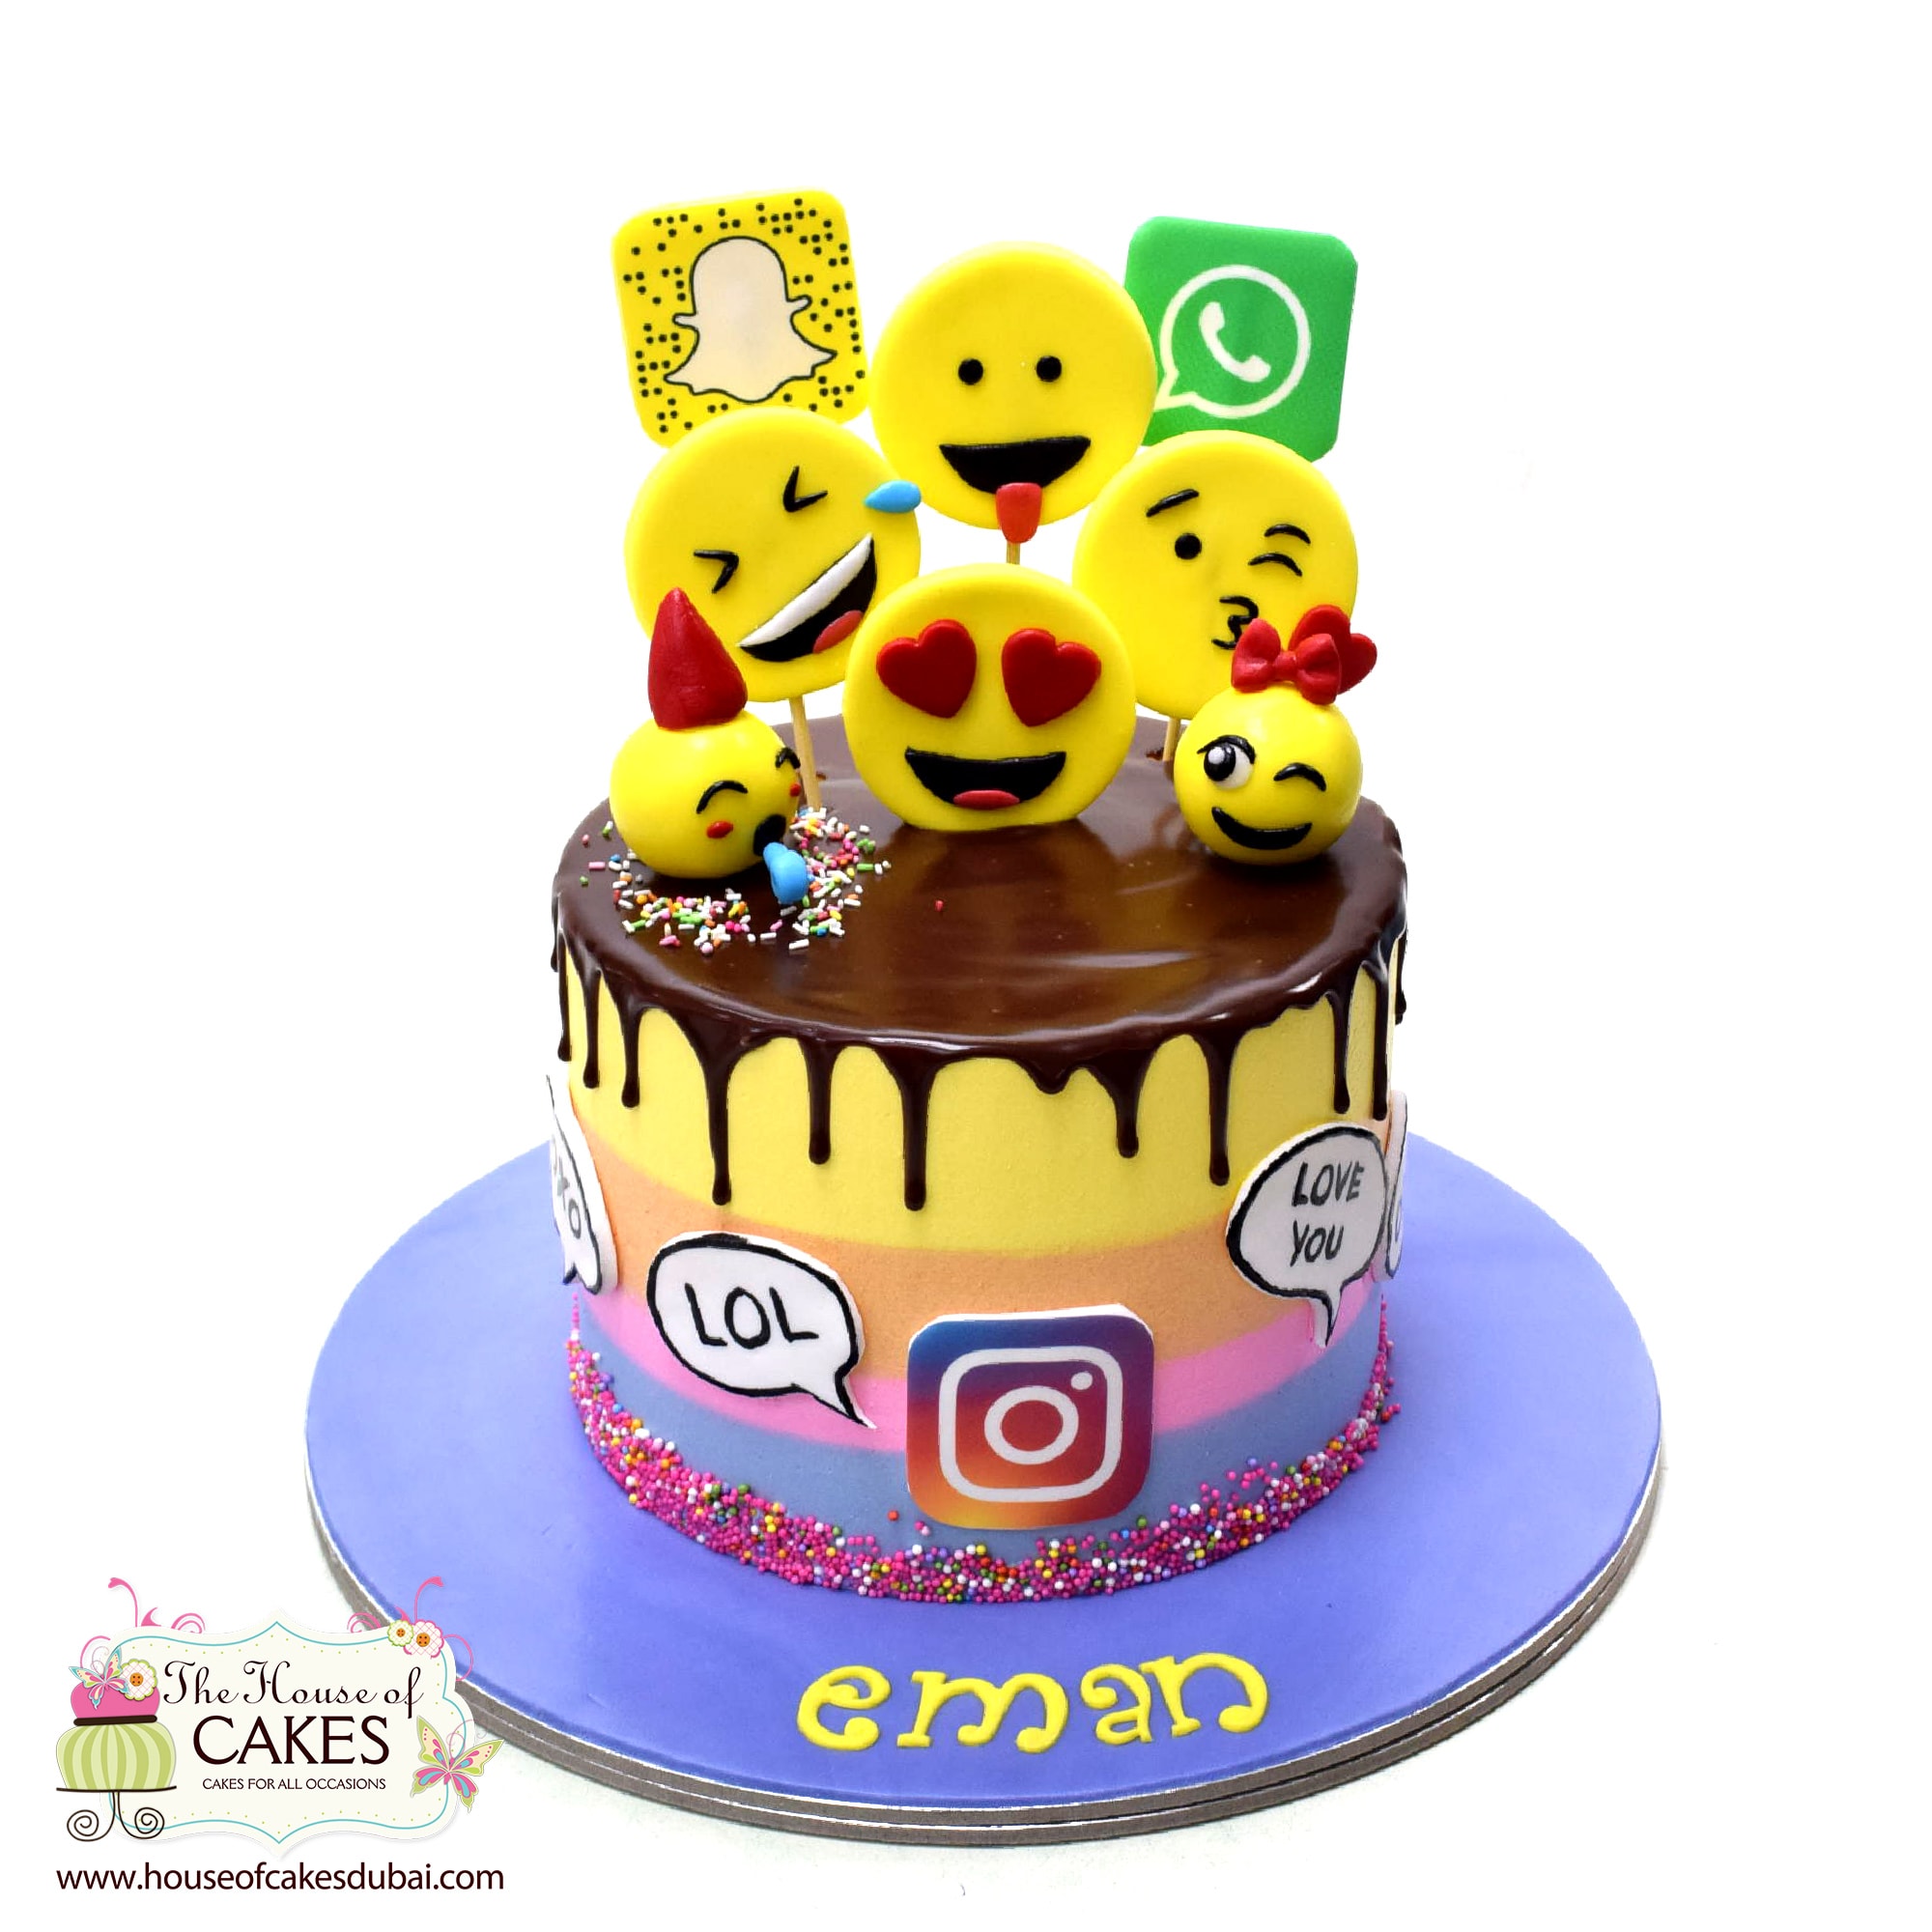 Tres leches WhatsApp cake... - Sweet Basket, Artisan Bakery | Facebook